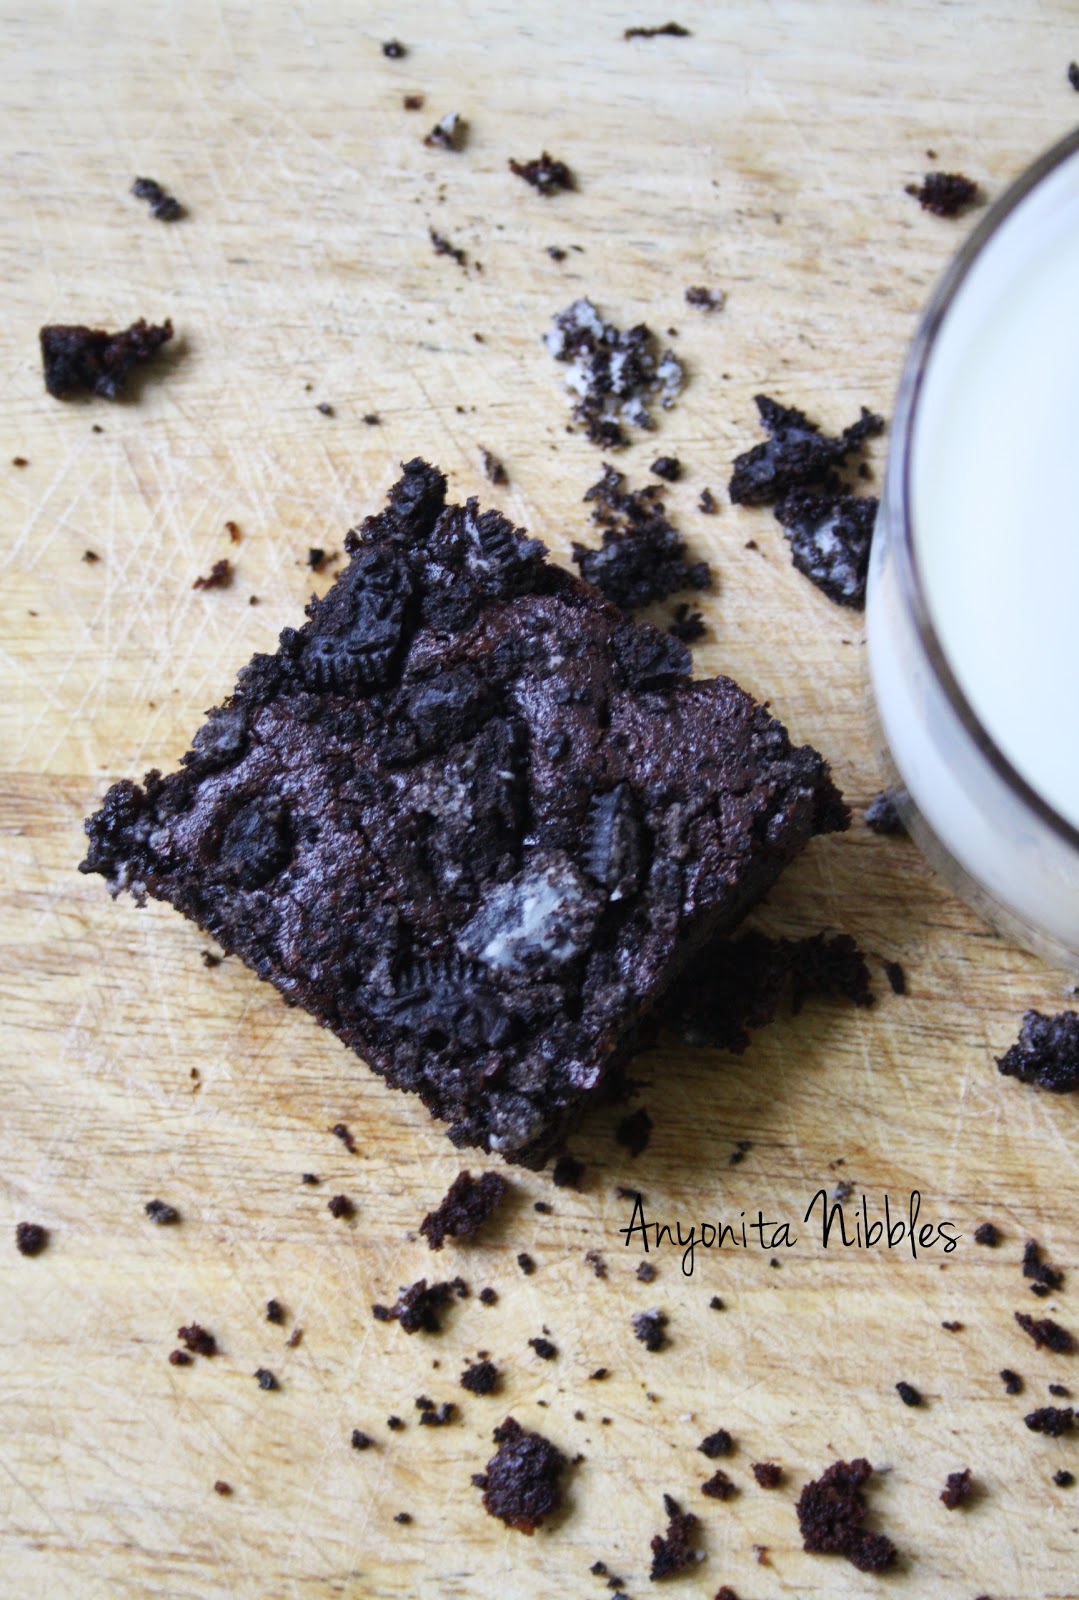 Anyonita Nibbles | Gluten-Free Recipes : Oreo Overload Brownies